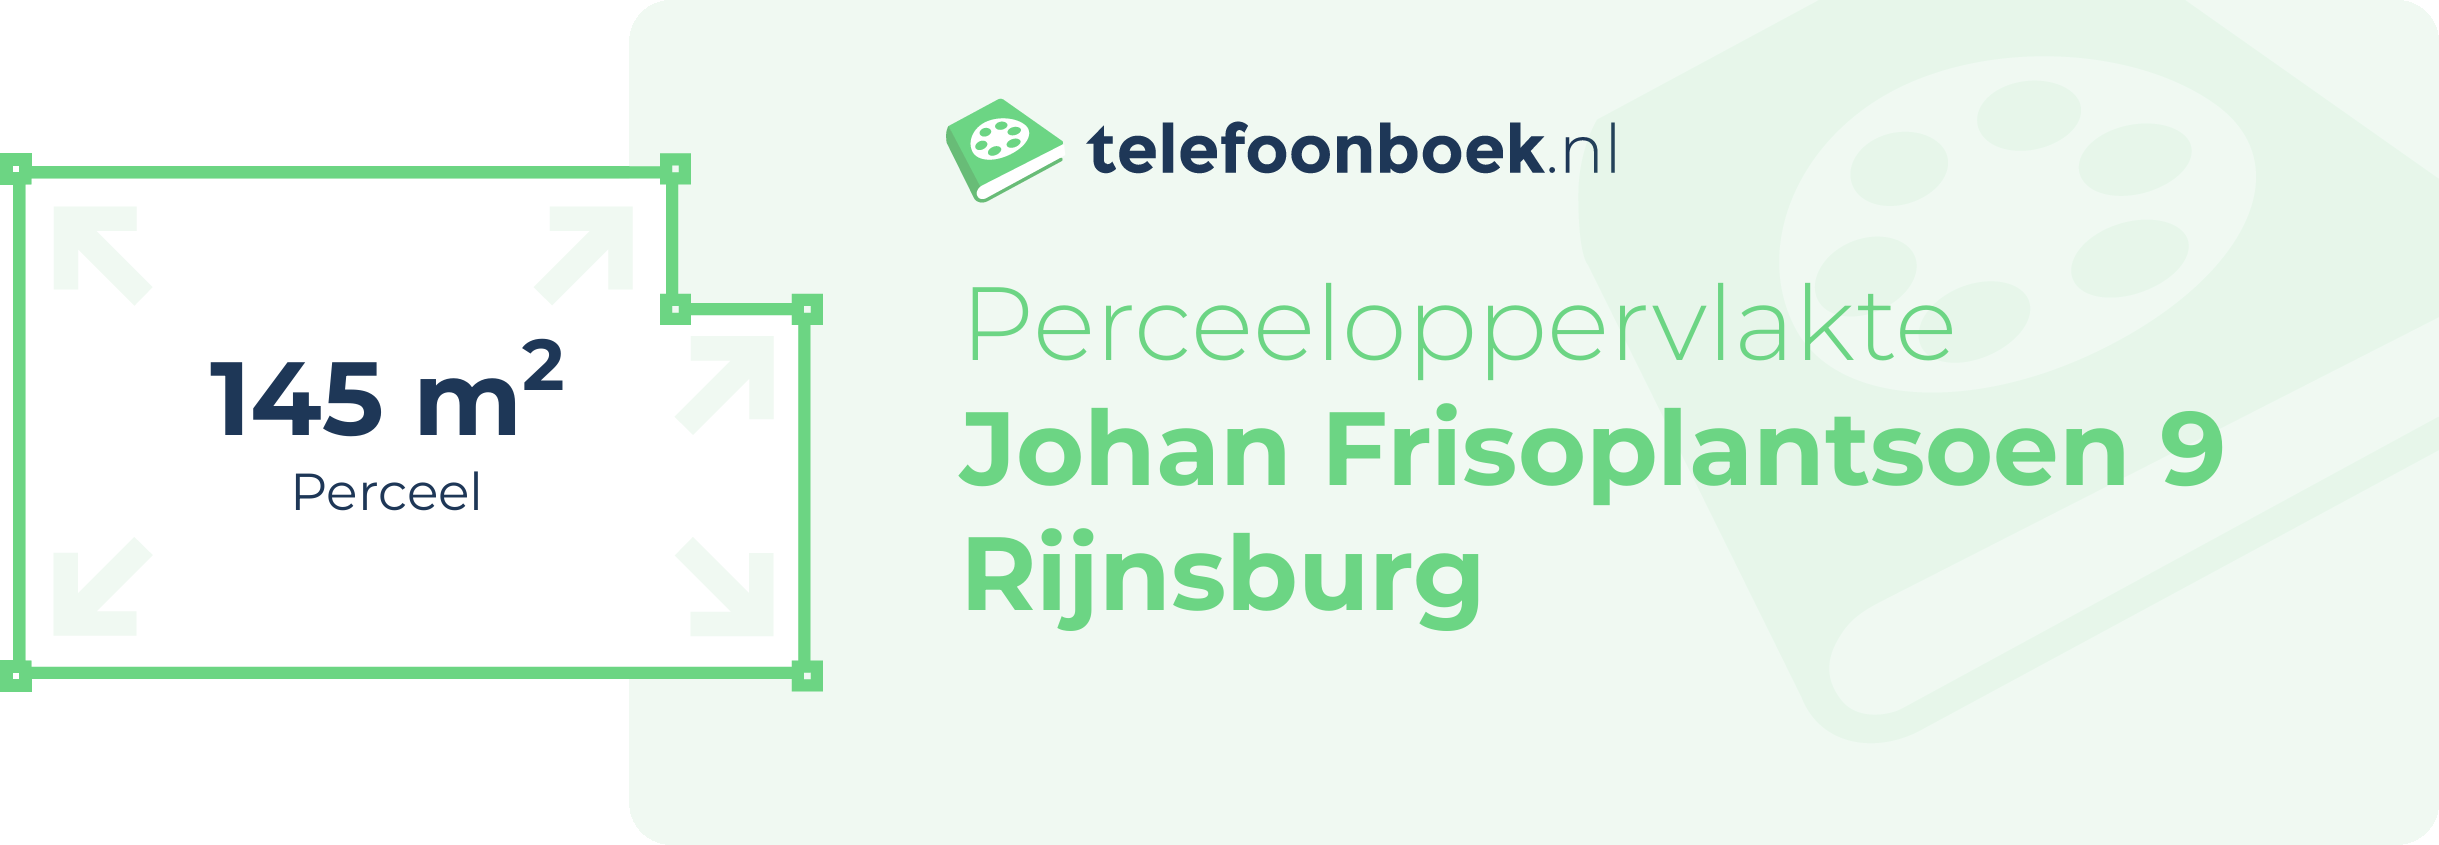 Perceeloppervlakte Johan Frisoplantsoen 9 Rijnsburg